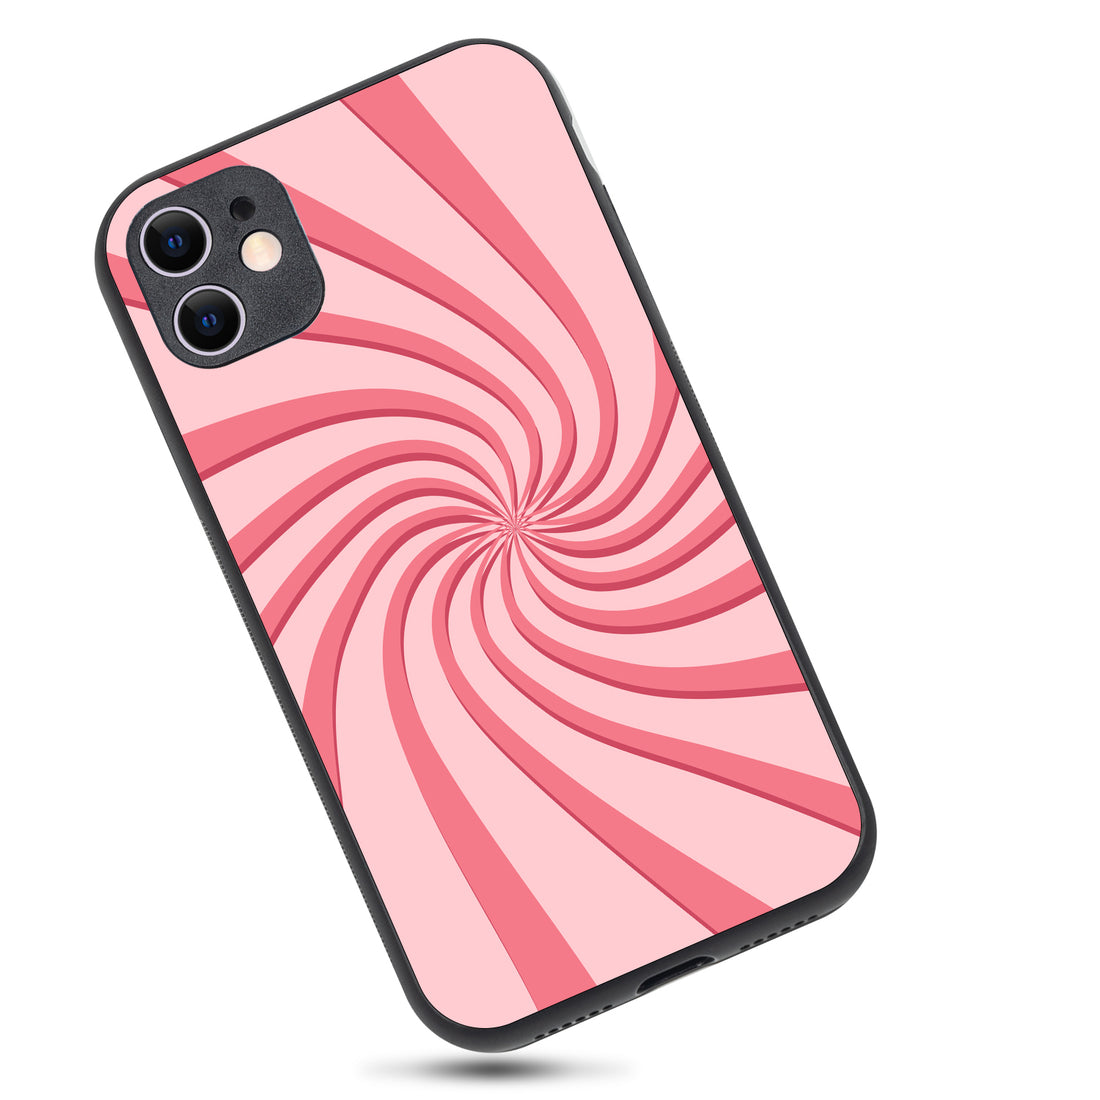 Spiral Optical Illusion iPhone 11 Case